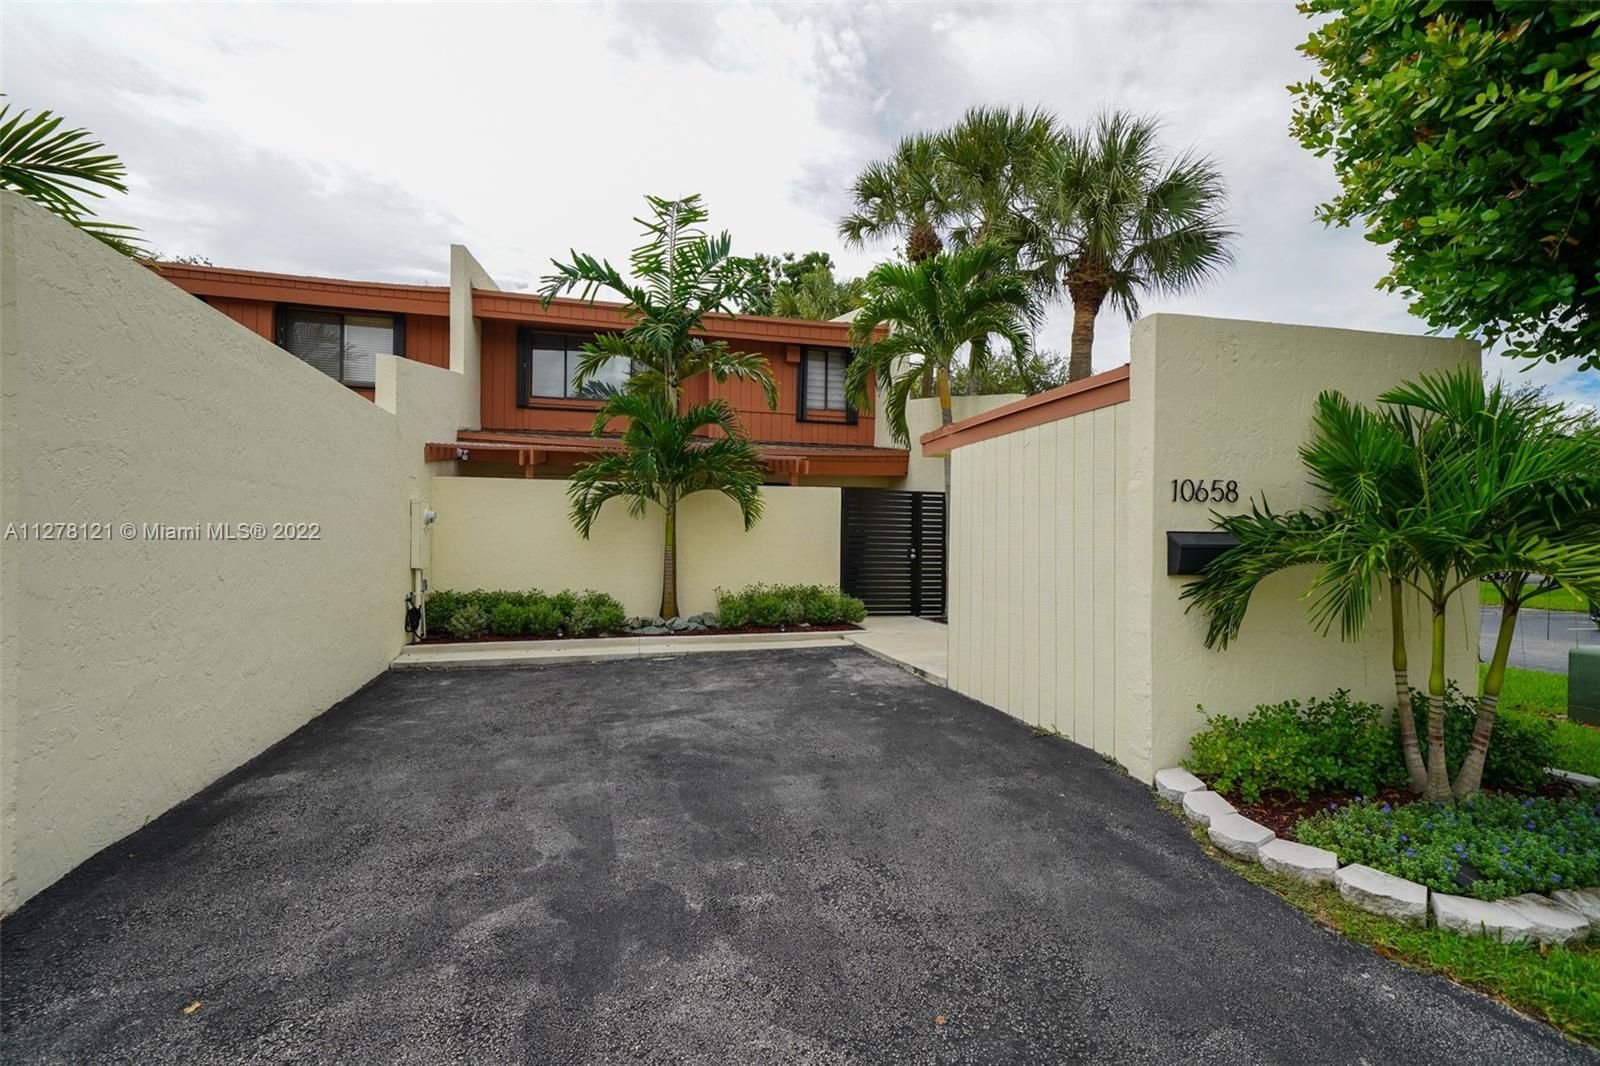 Real estate property located at 10658 76th Ter, Miami-Dade County, Miami, FL